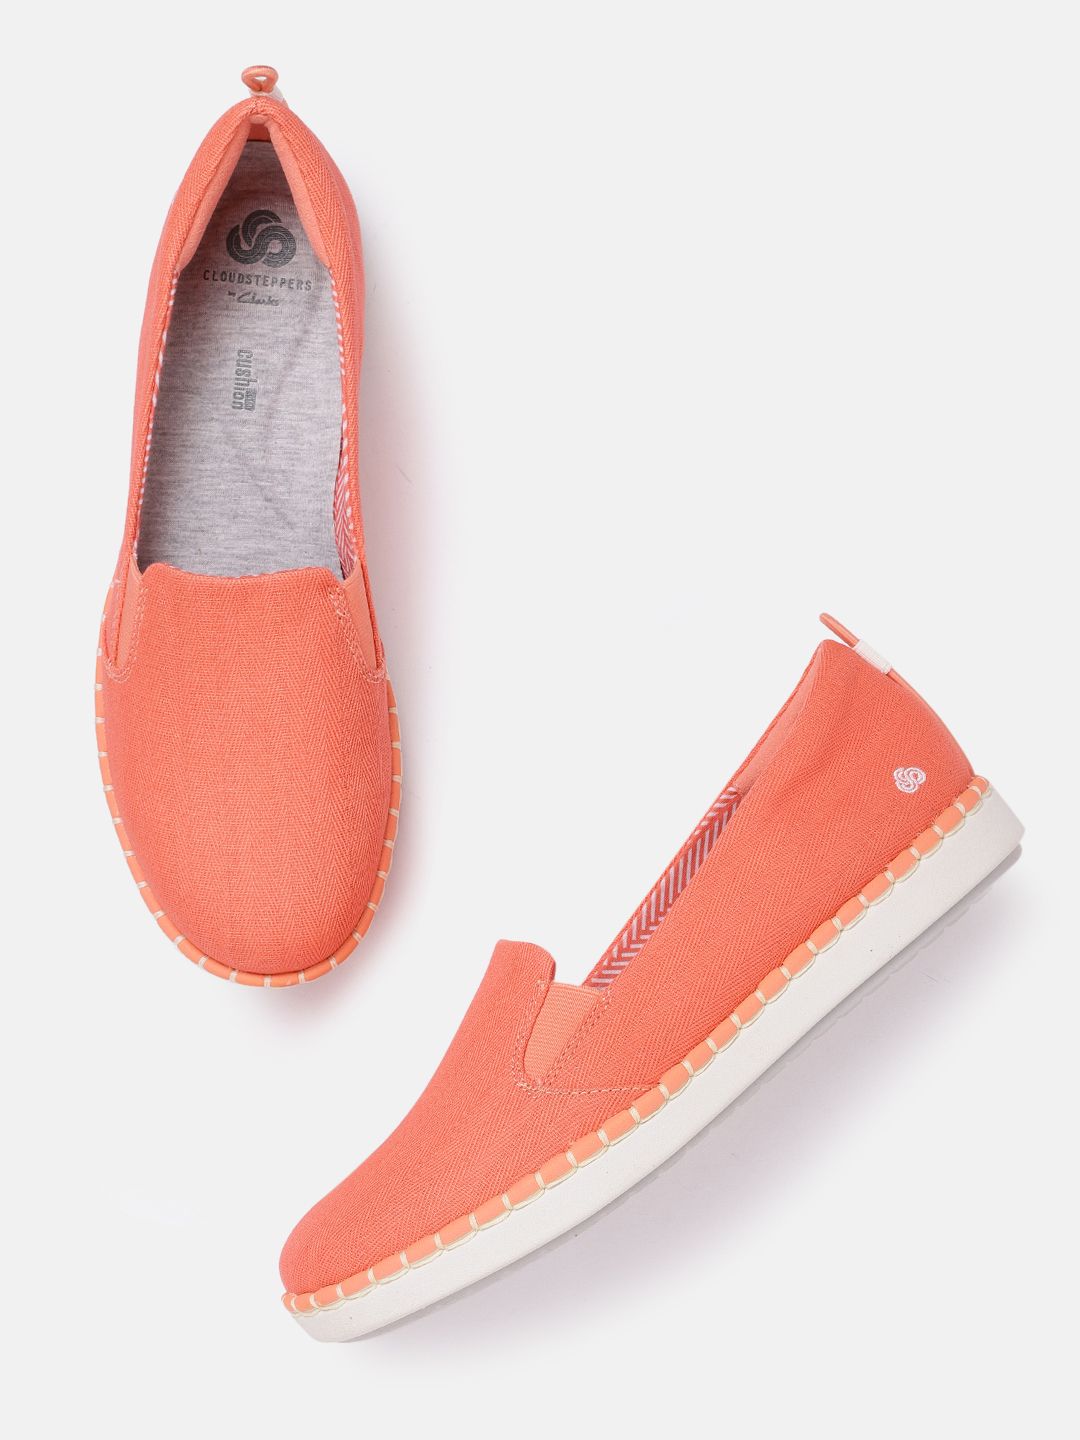 Clarks Women Coral Orange Woven Design Slip-On Sneakers Price in India